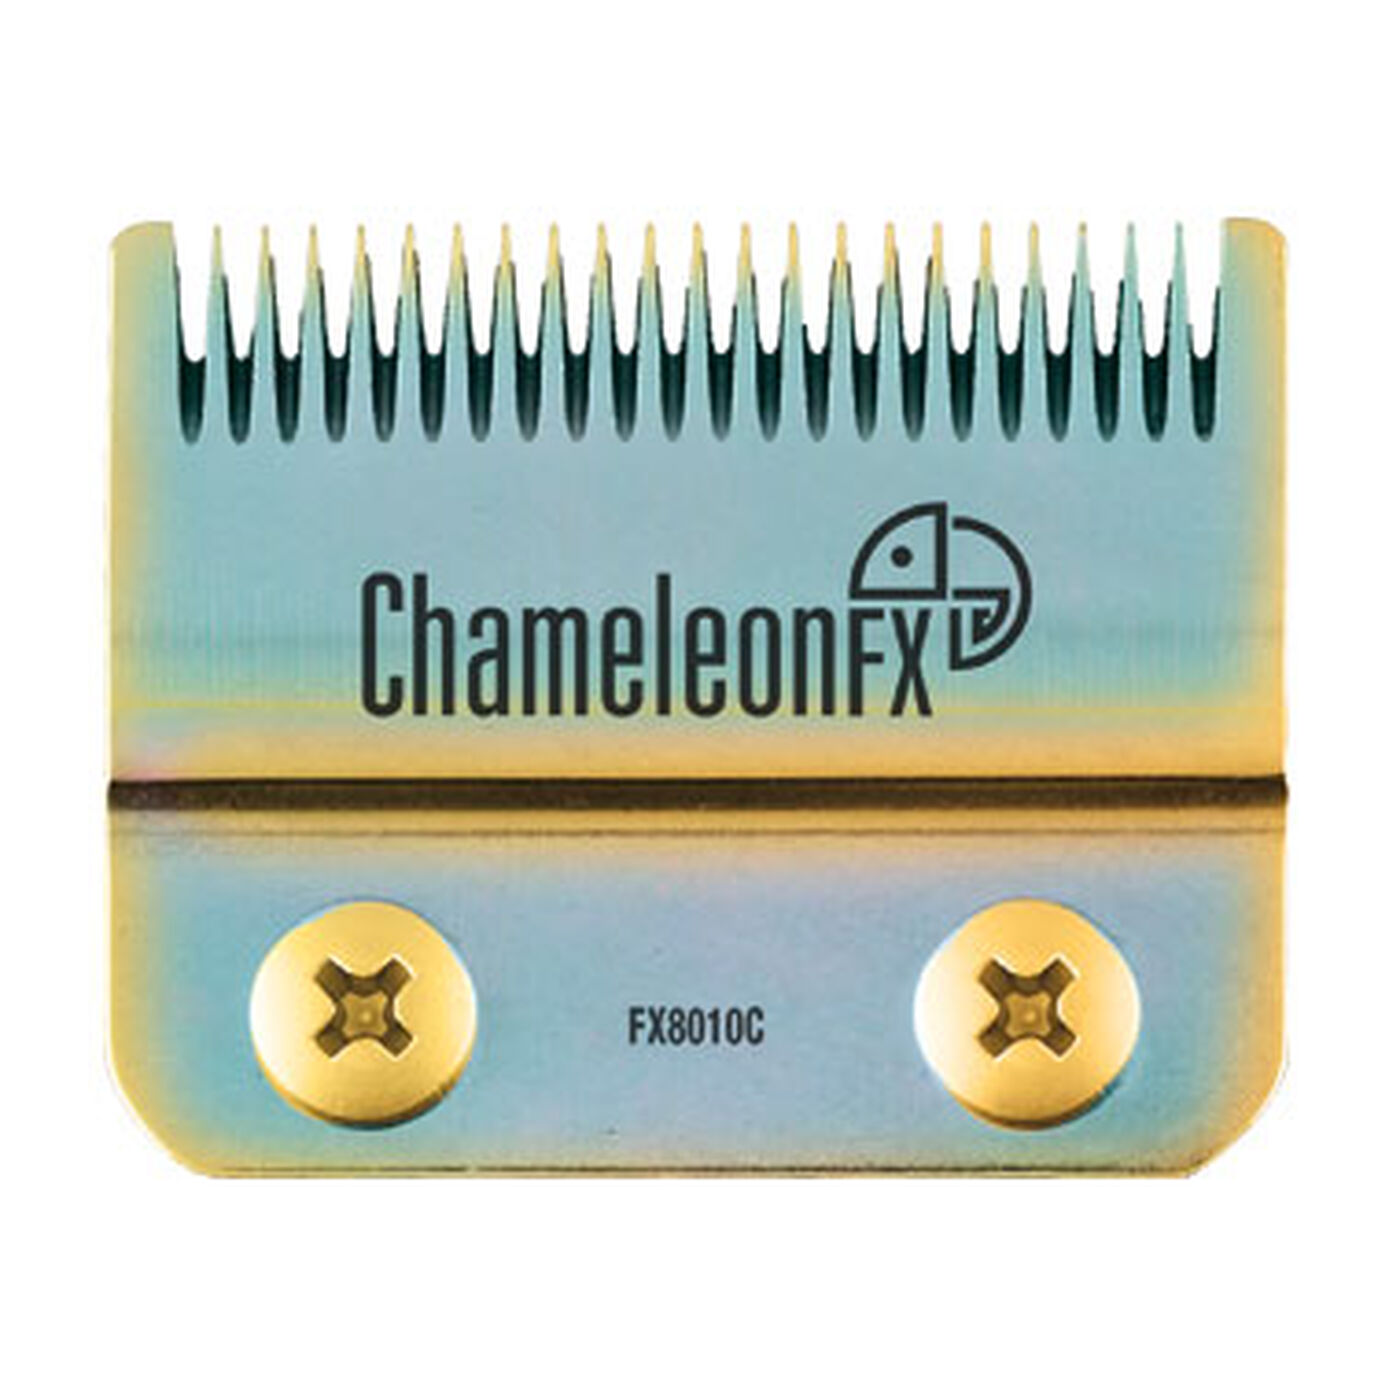 BABYLISS PRO Chameleon FX CLIPPER-Babyliss- Hive Beauty Supply